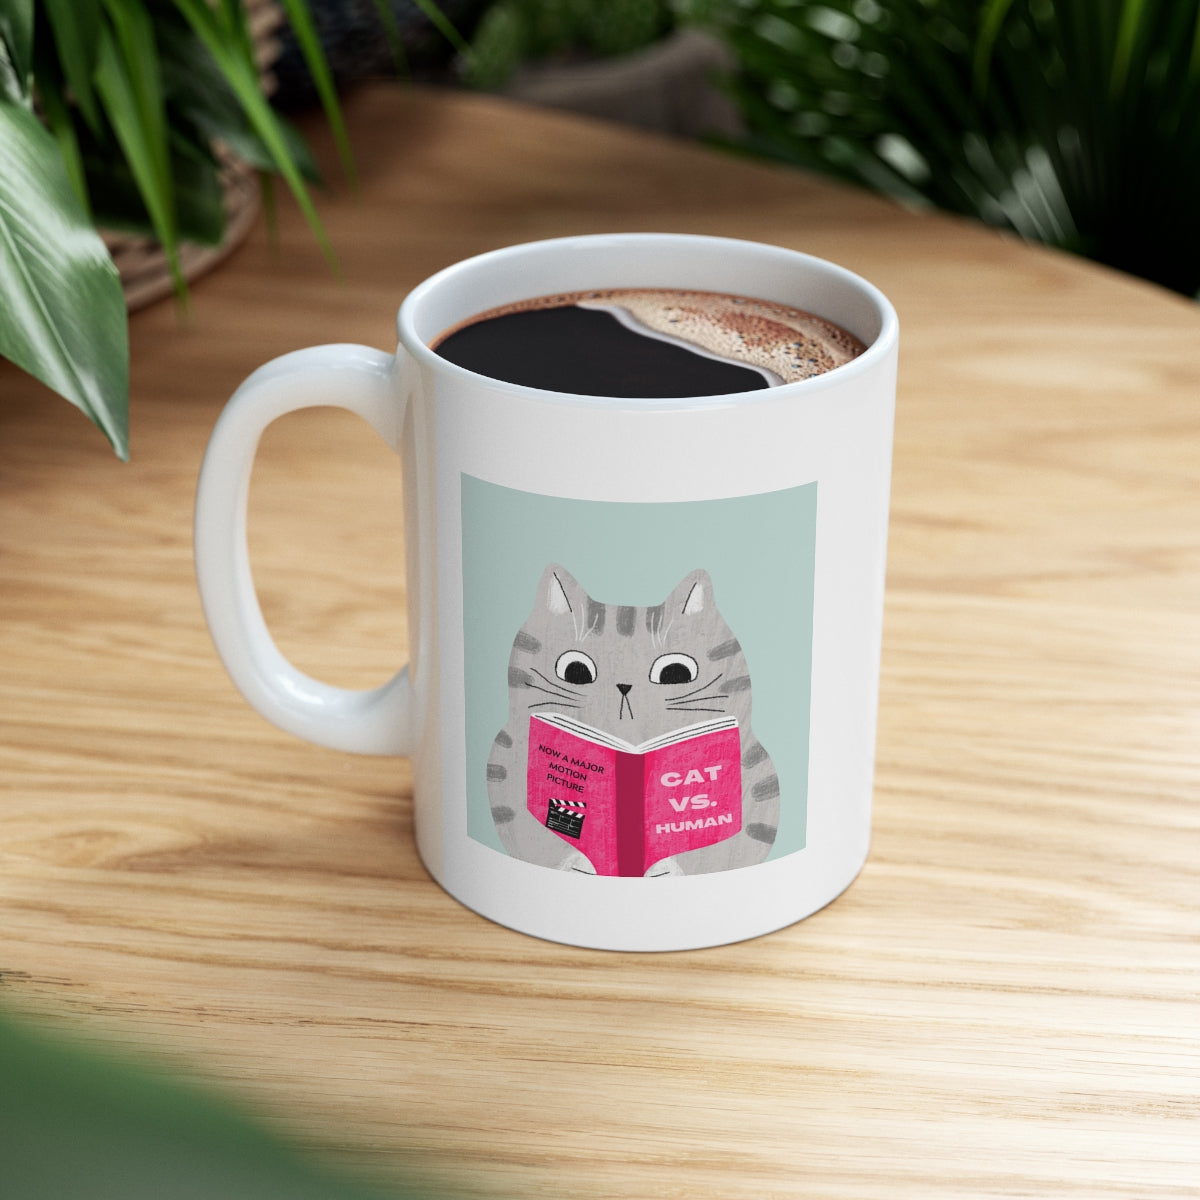 Cat Vs. Human Funny Mug